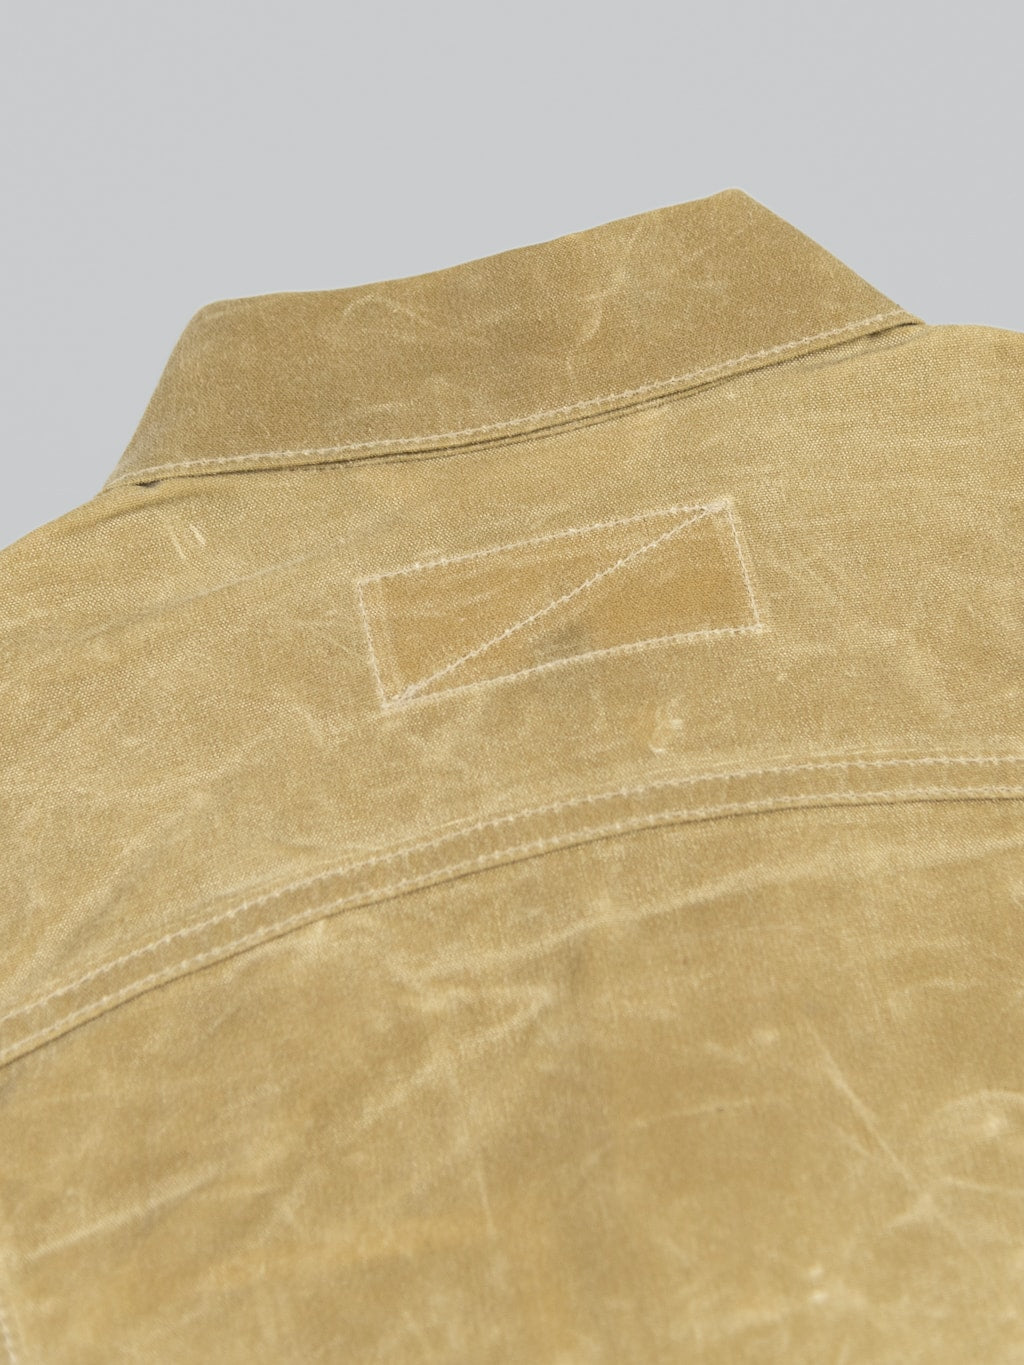 Rogue Territory Waxed Canvas Supply Jacket Tan Ridgeline texture